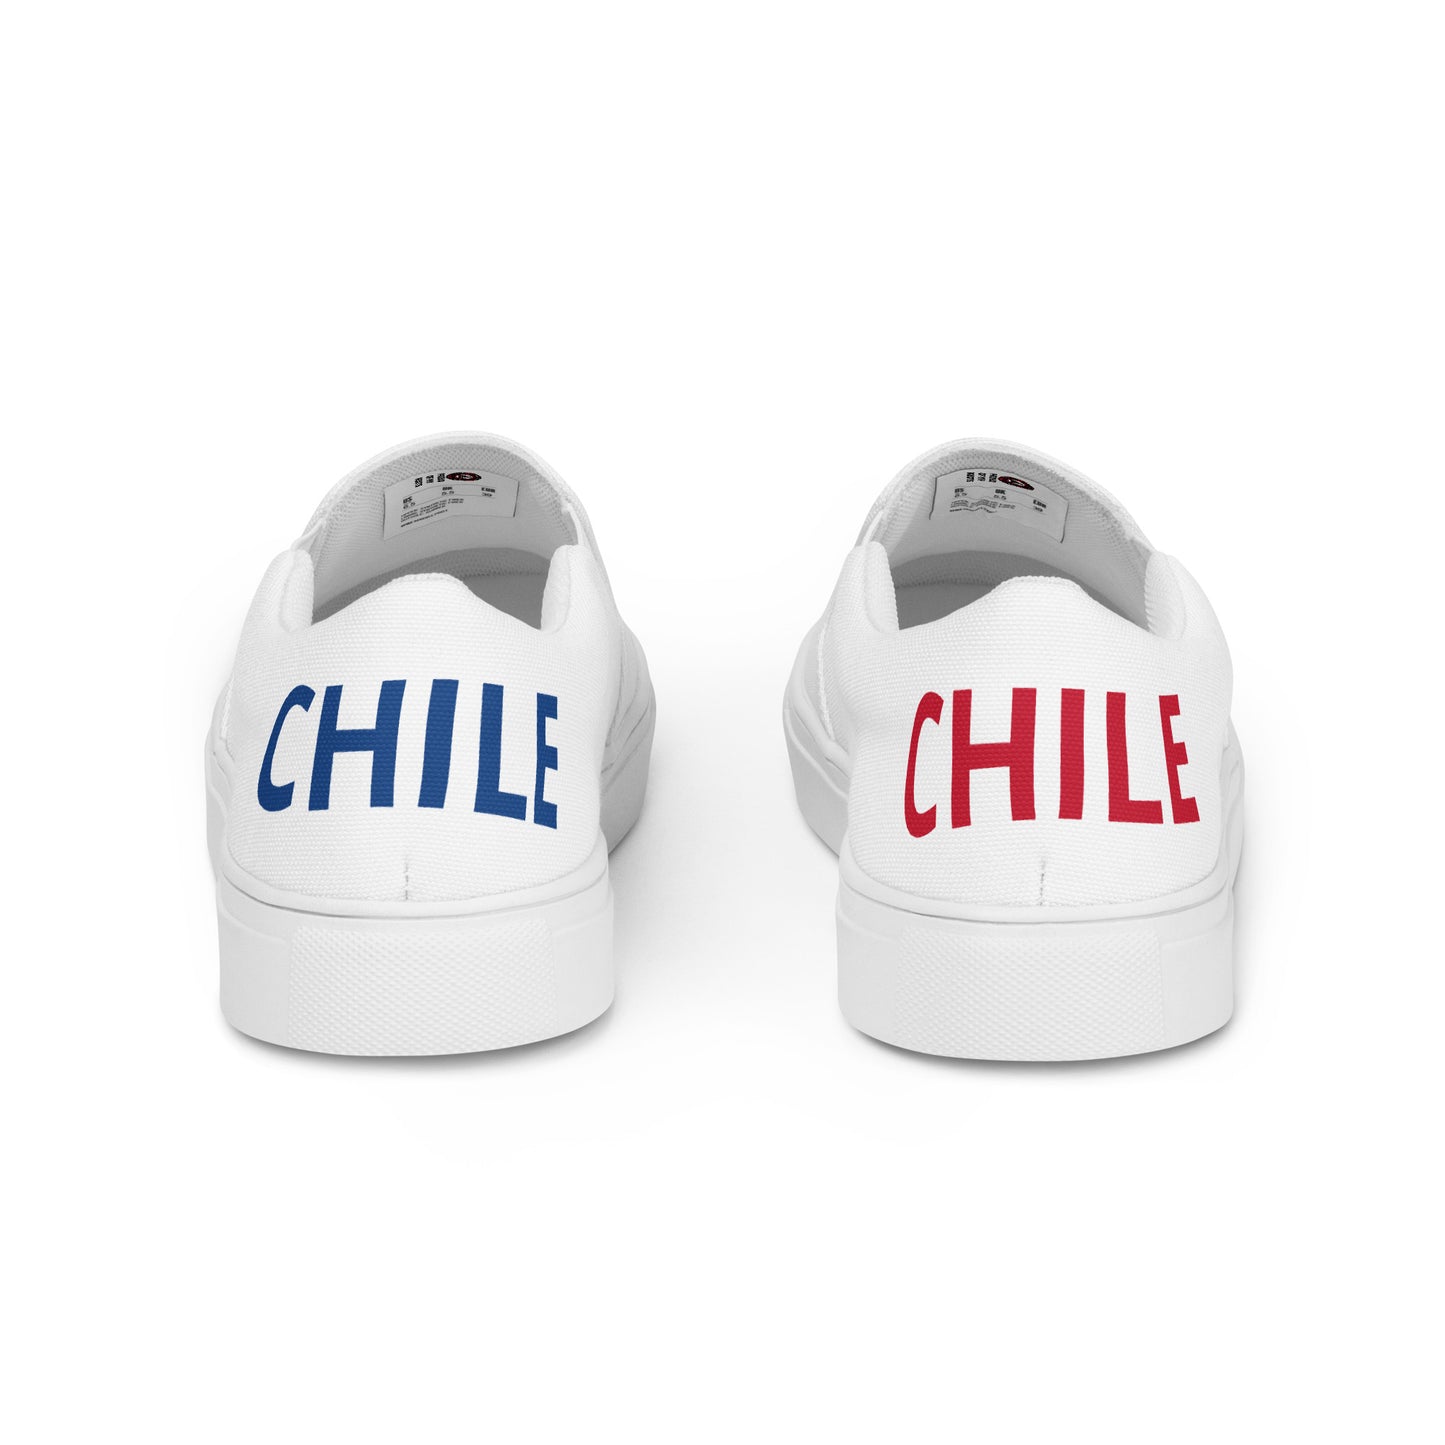 Chile - Men - White - Slip-on shoes